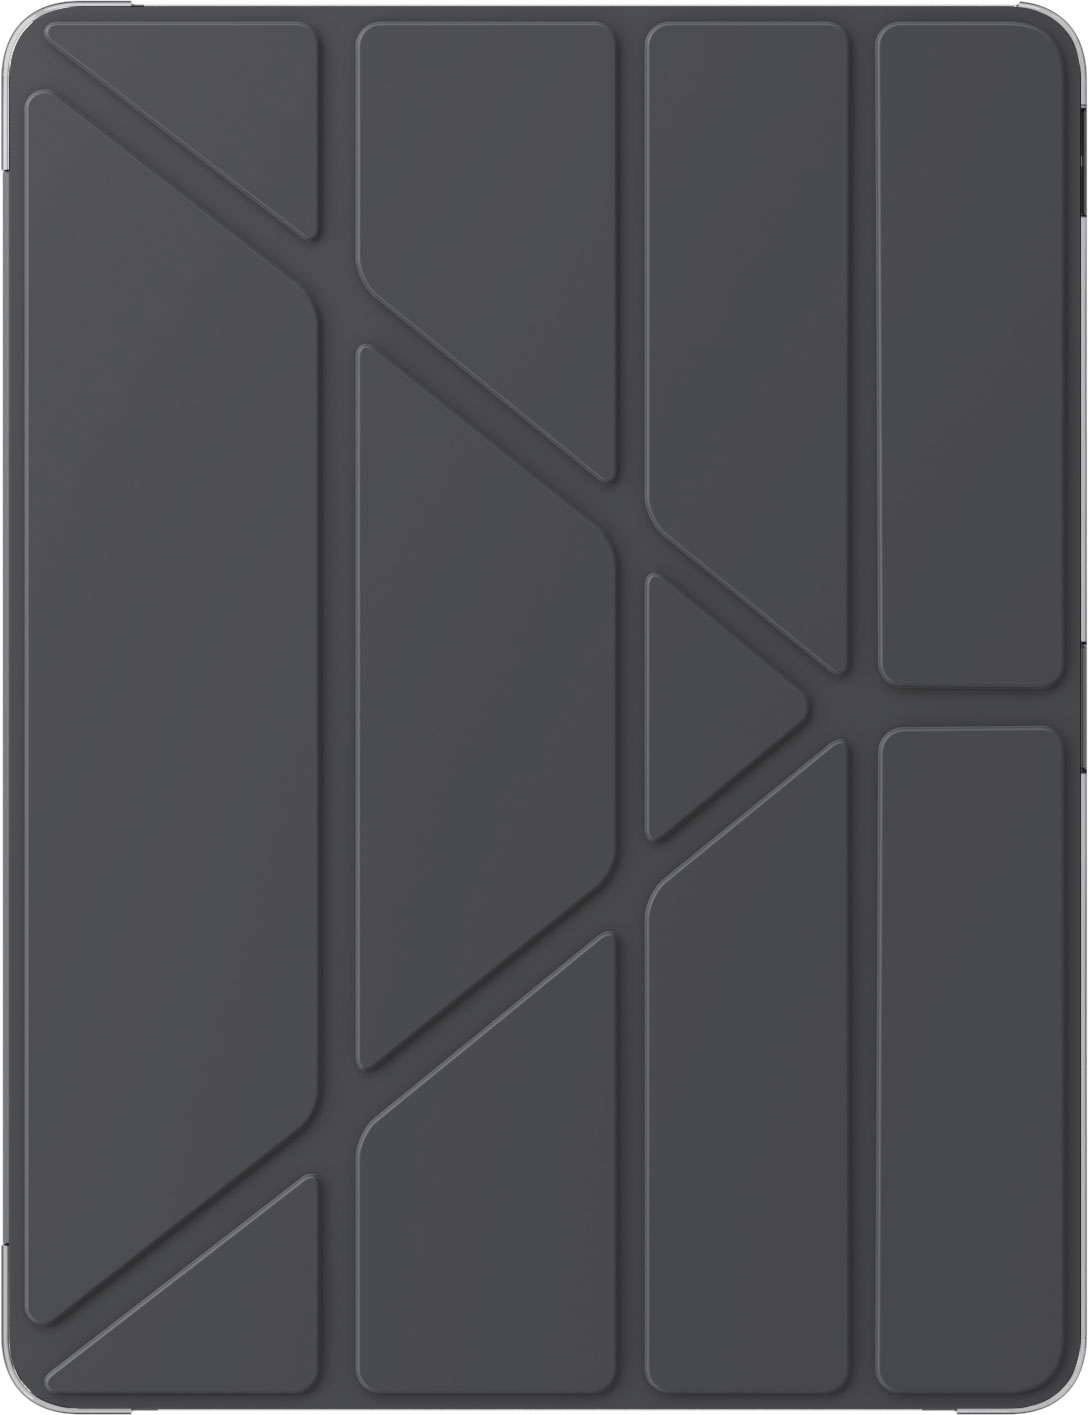 Чехол moonfish для iPad 10.2 Origami, пластик, серый